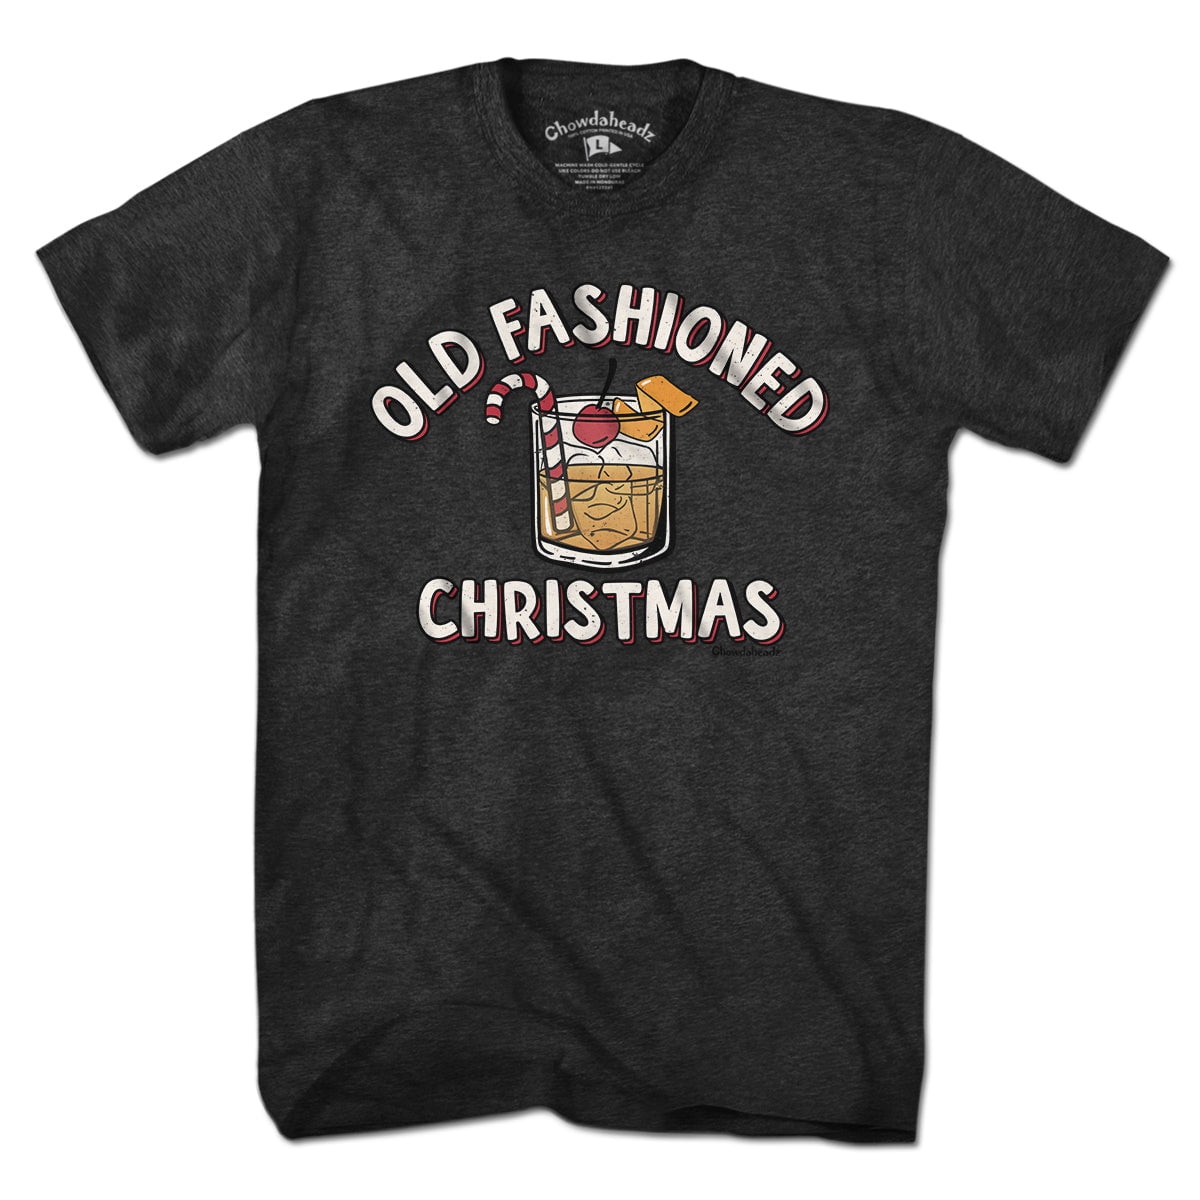 Old Fashioned Christmas T-Shirt - Chowdaheadz